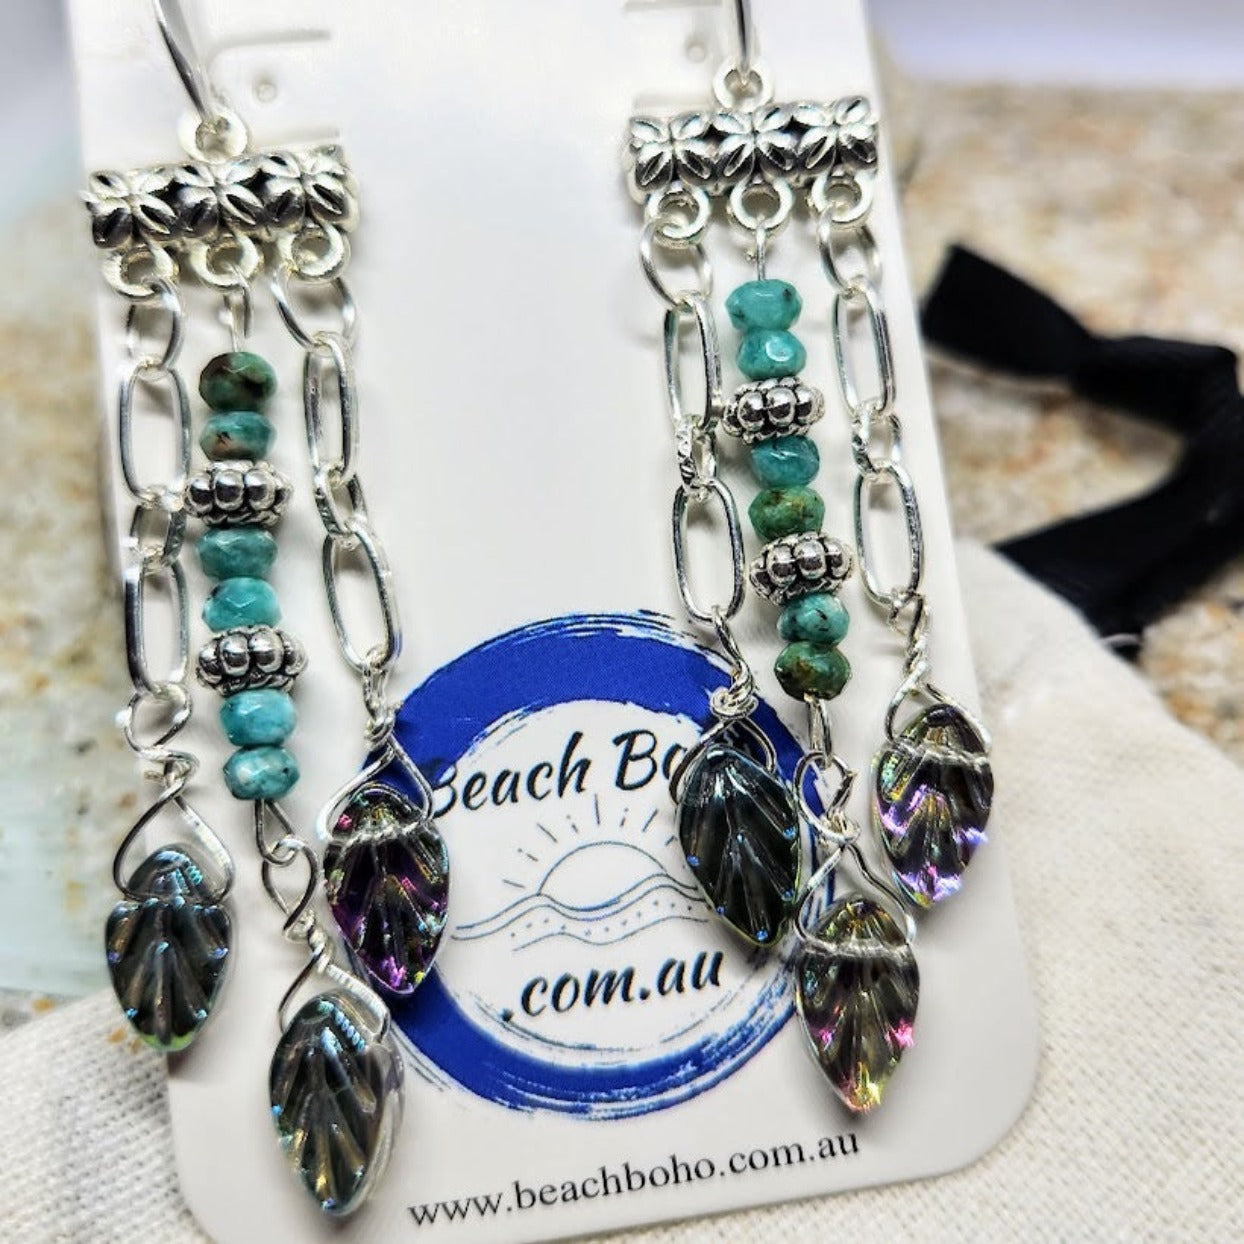 THREE LEAVES - CECH GLASS LEAVE SILVER HOOK EARRINGS - Premium earrings from www.beachboho,com.au - Just $60! Shop now at www.beachboho.com.au